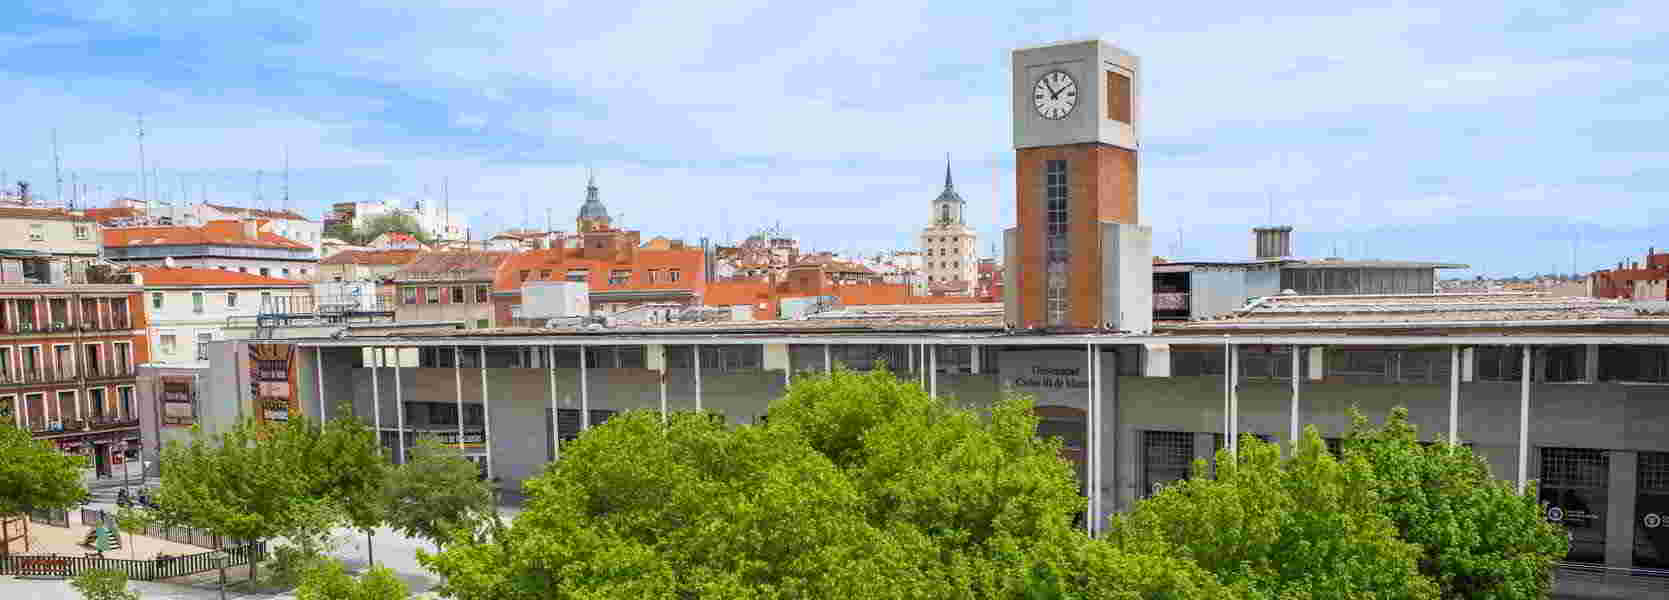 Universidad Carlos III de Madrid - UC3M